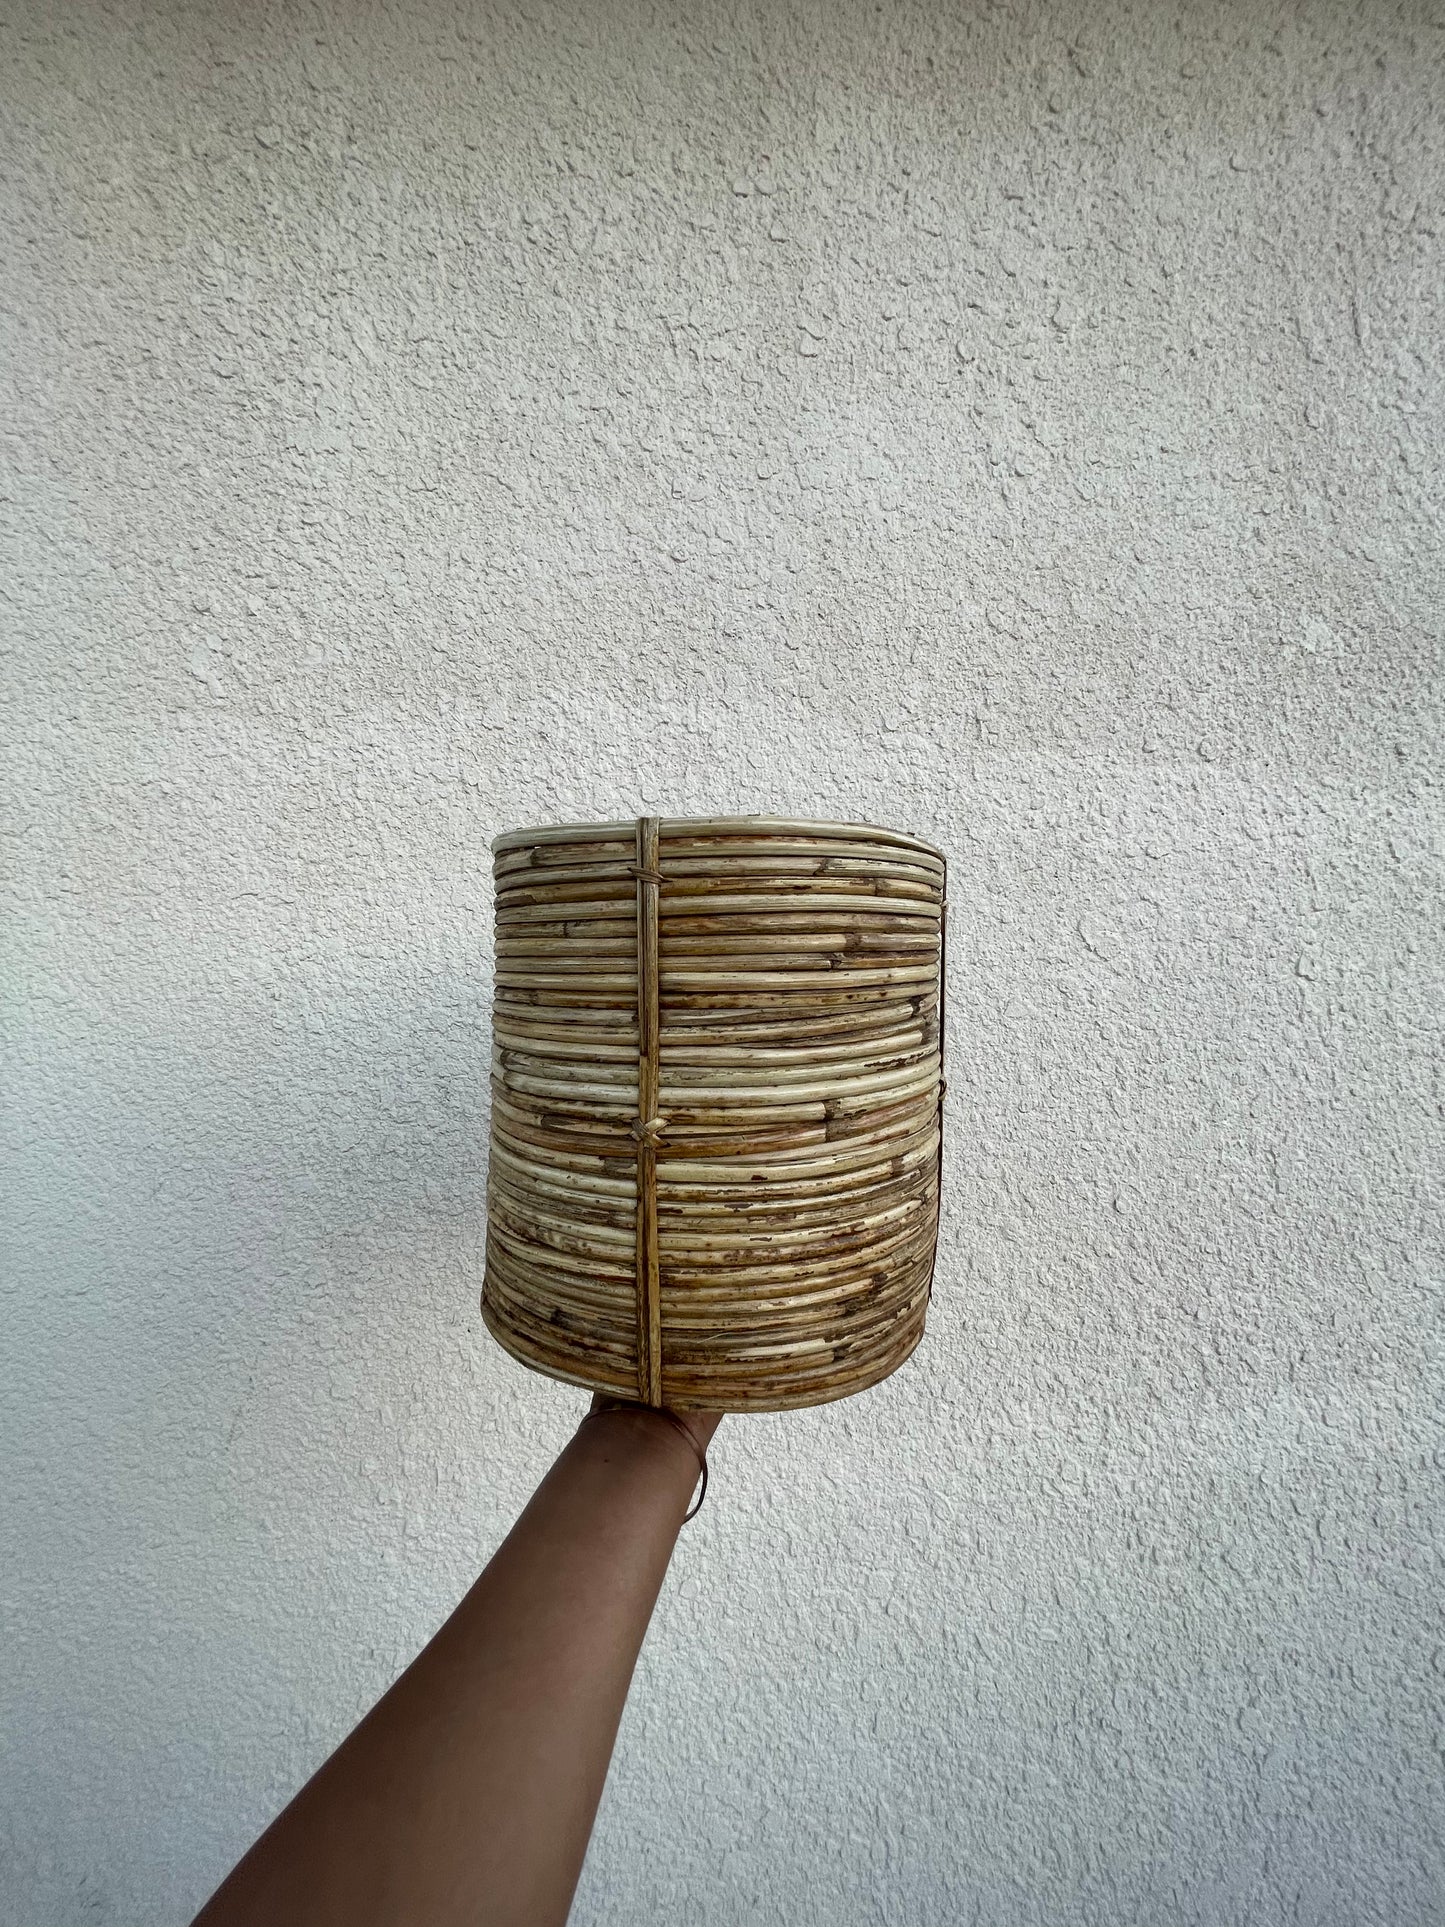 Coiled Cane Planter/ Storage  ︳Small.